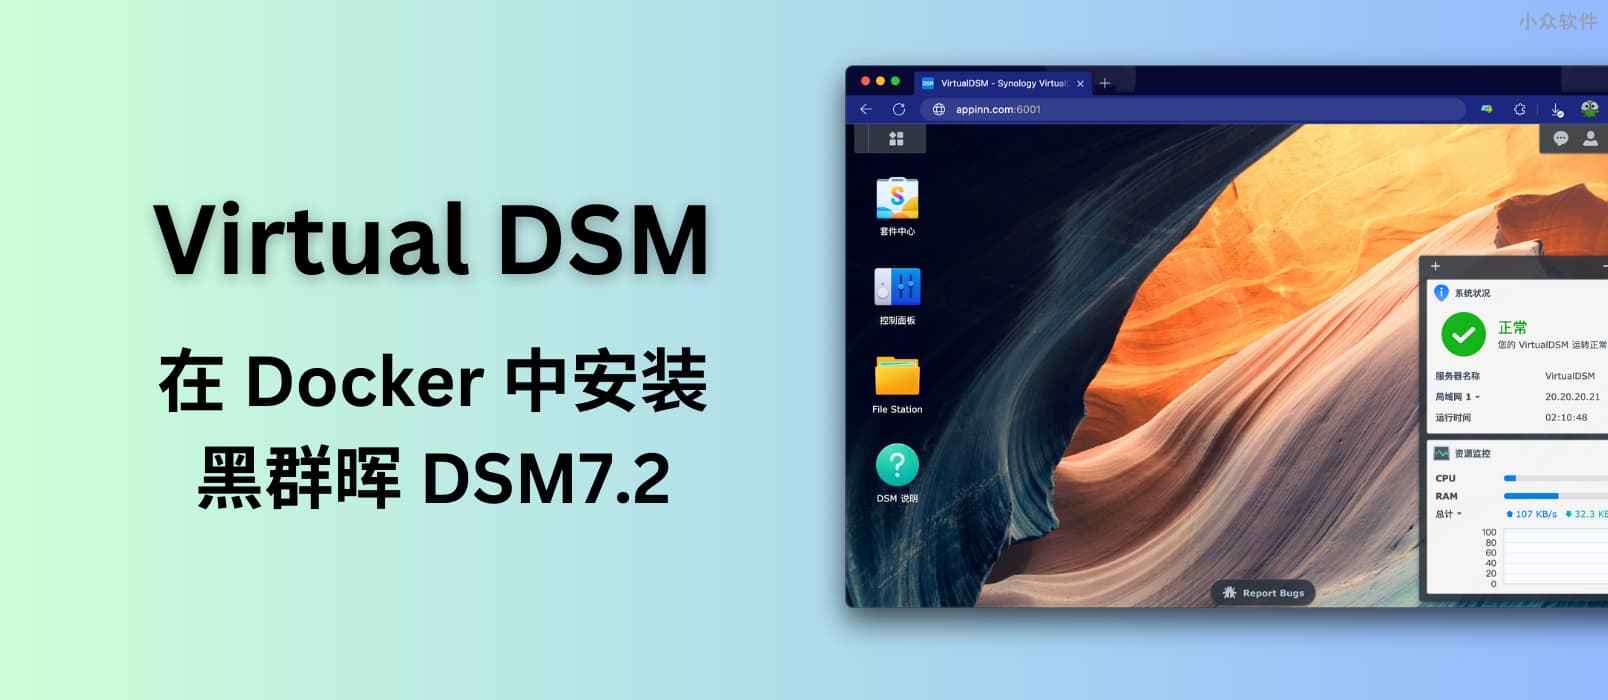 Virtual DSM – 在 Docker 里安装黑群晖 DSM 7.2 系统